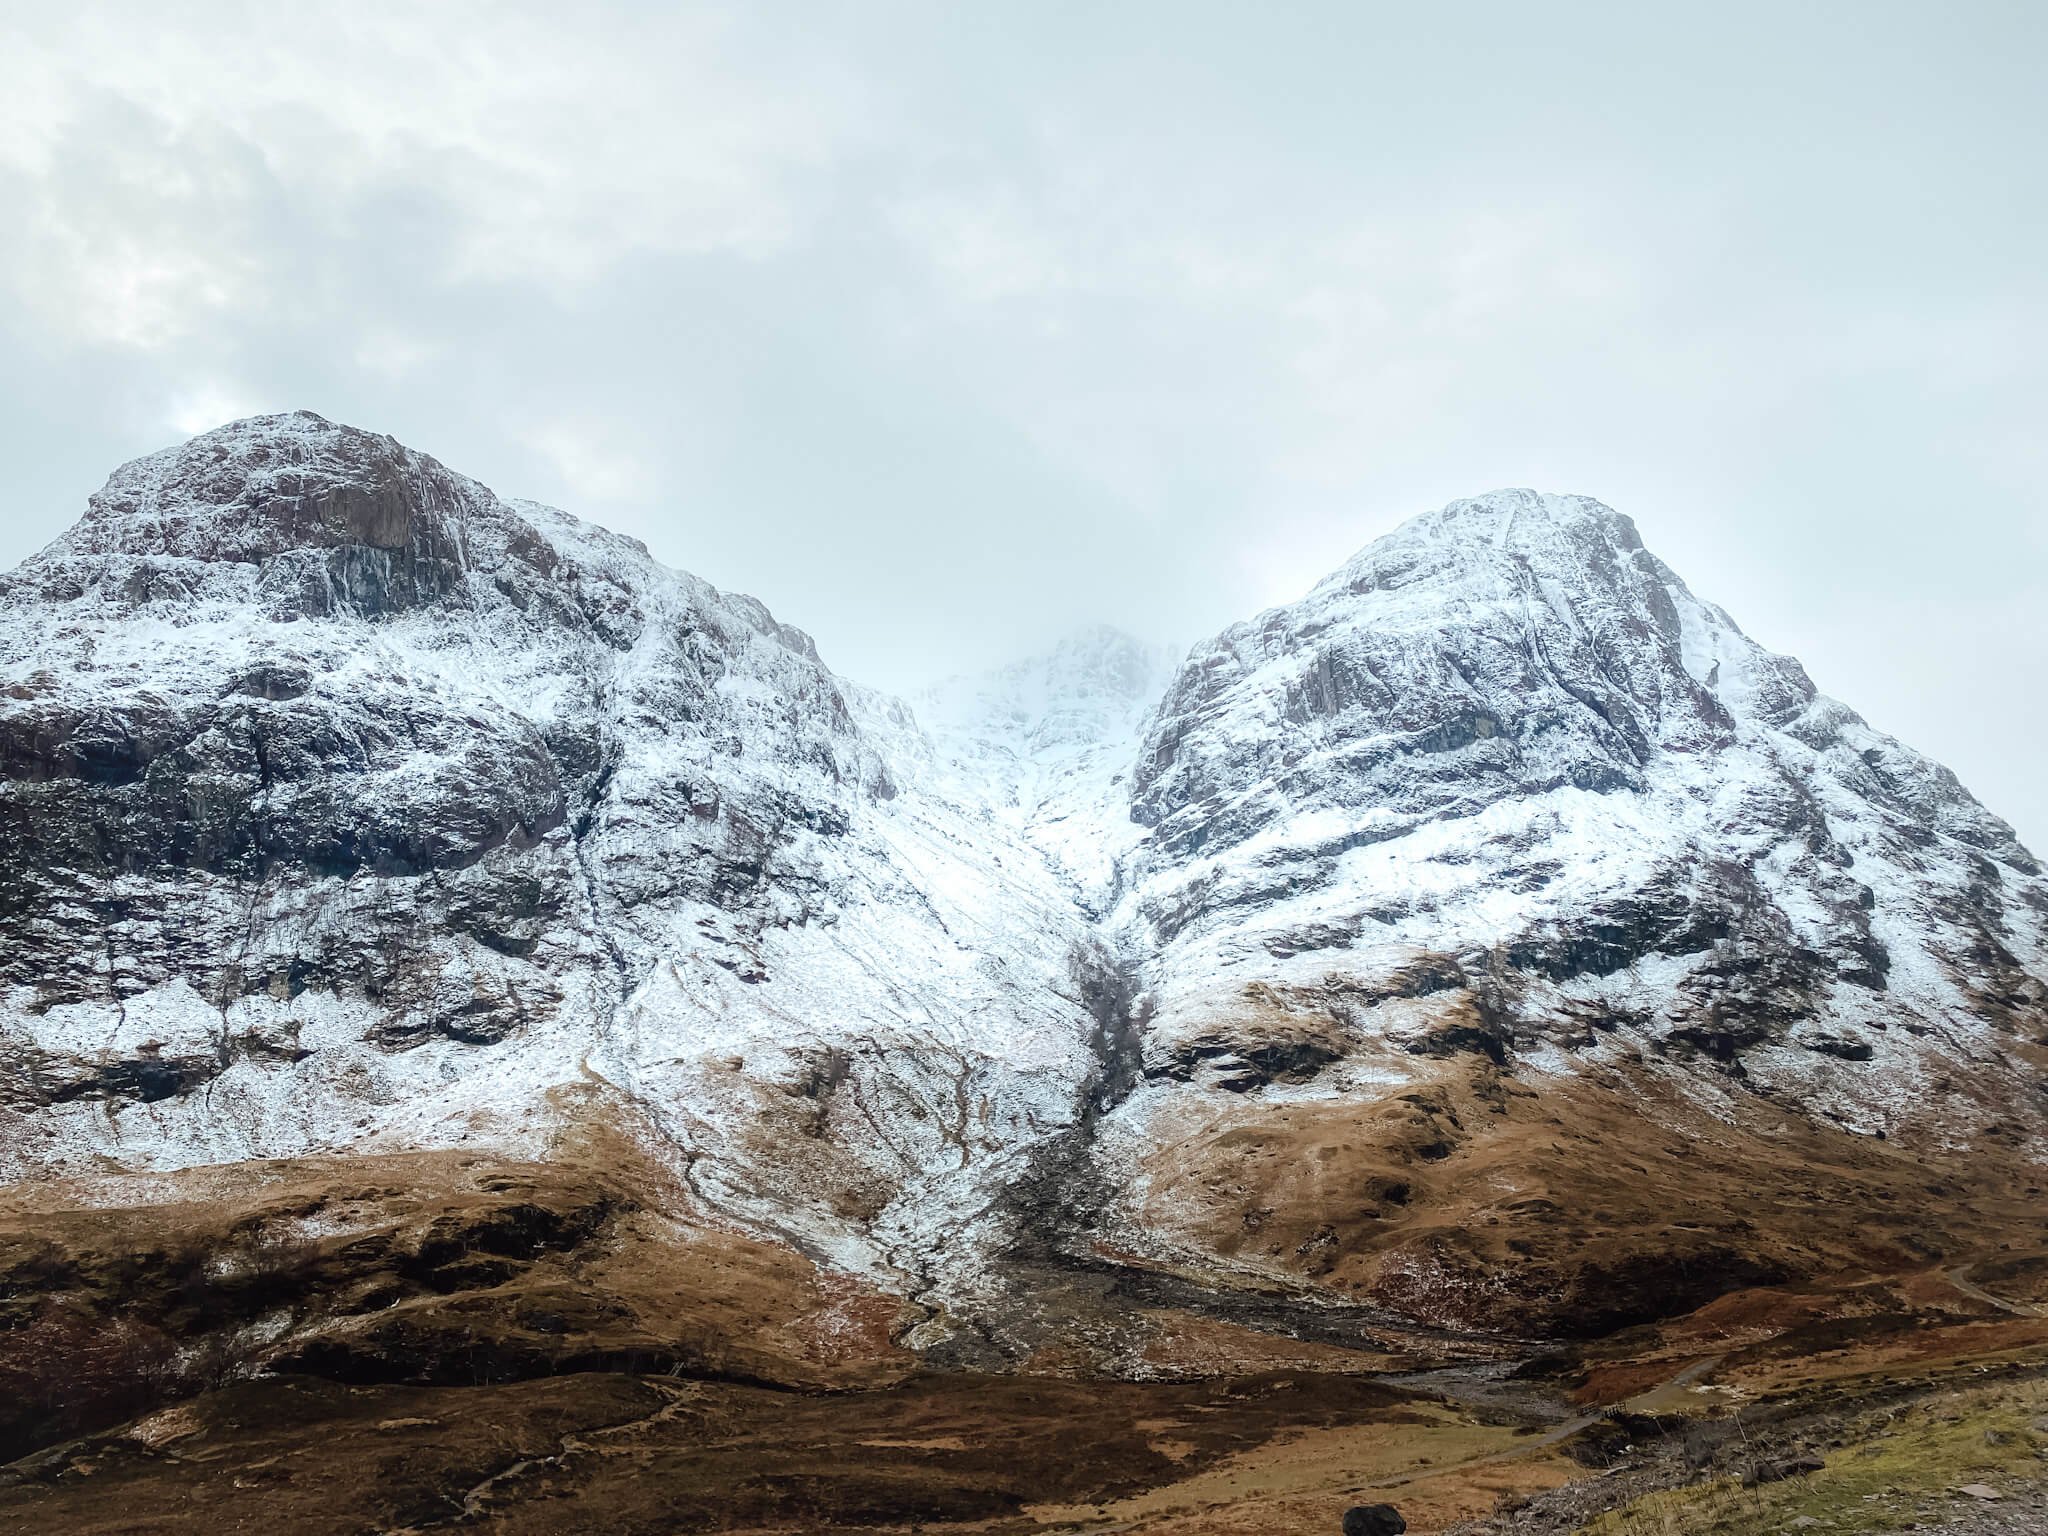 Scotland in winter, Glencoe snowy mountains